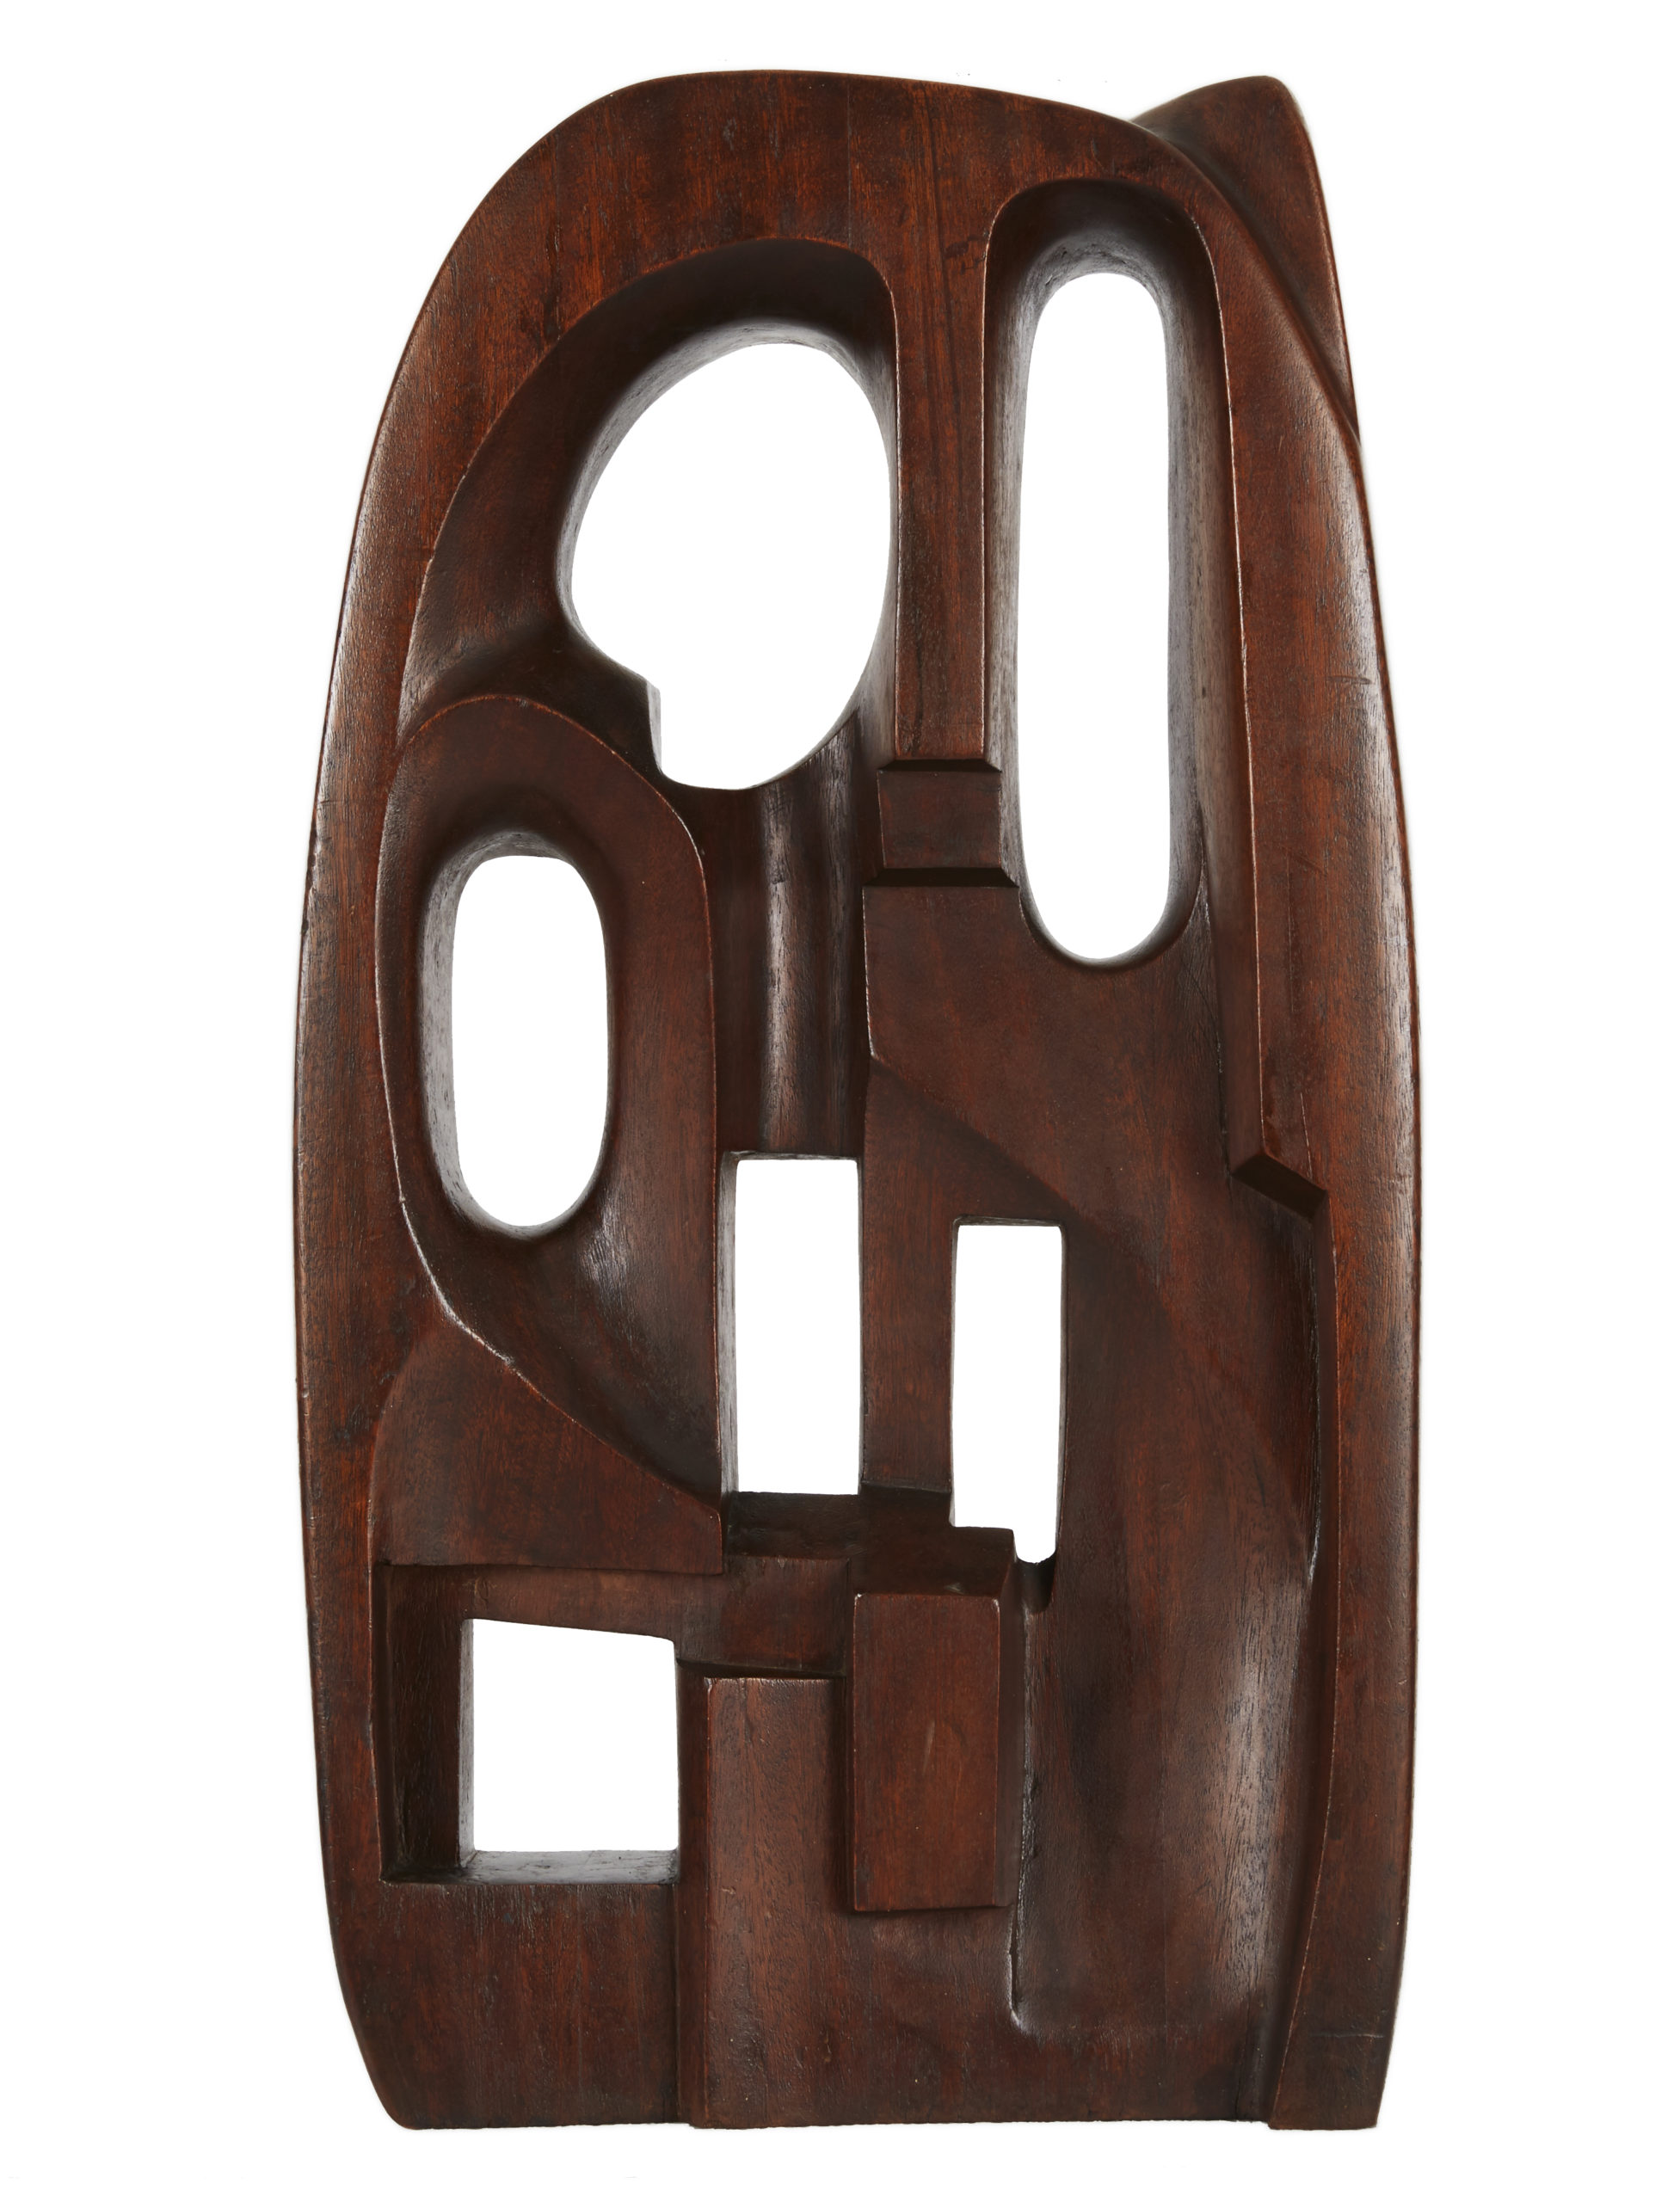 Saloua Raouda Choucair, Interform, 1960, Wood, 60 × 32 × 11.5 cm. Image courtesy of Barjeel Art Foundation, Sharjah. 